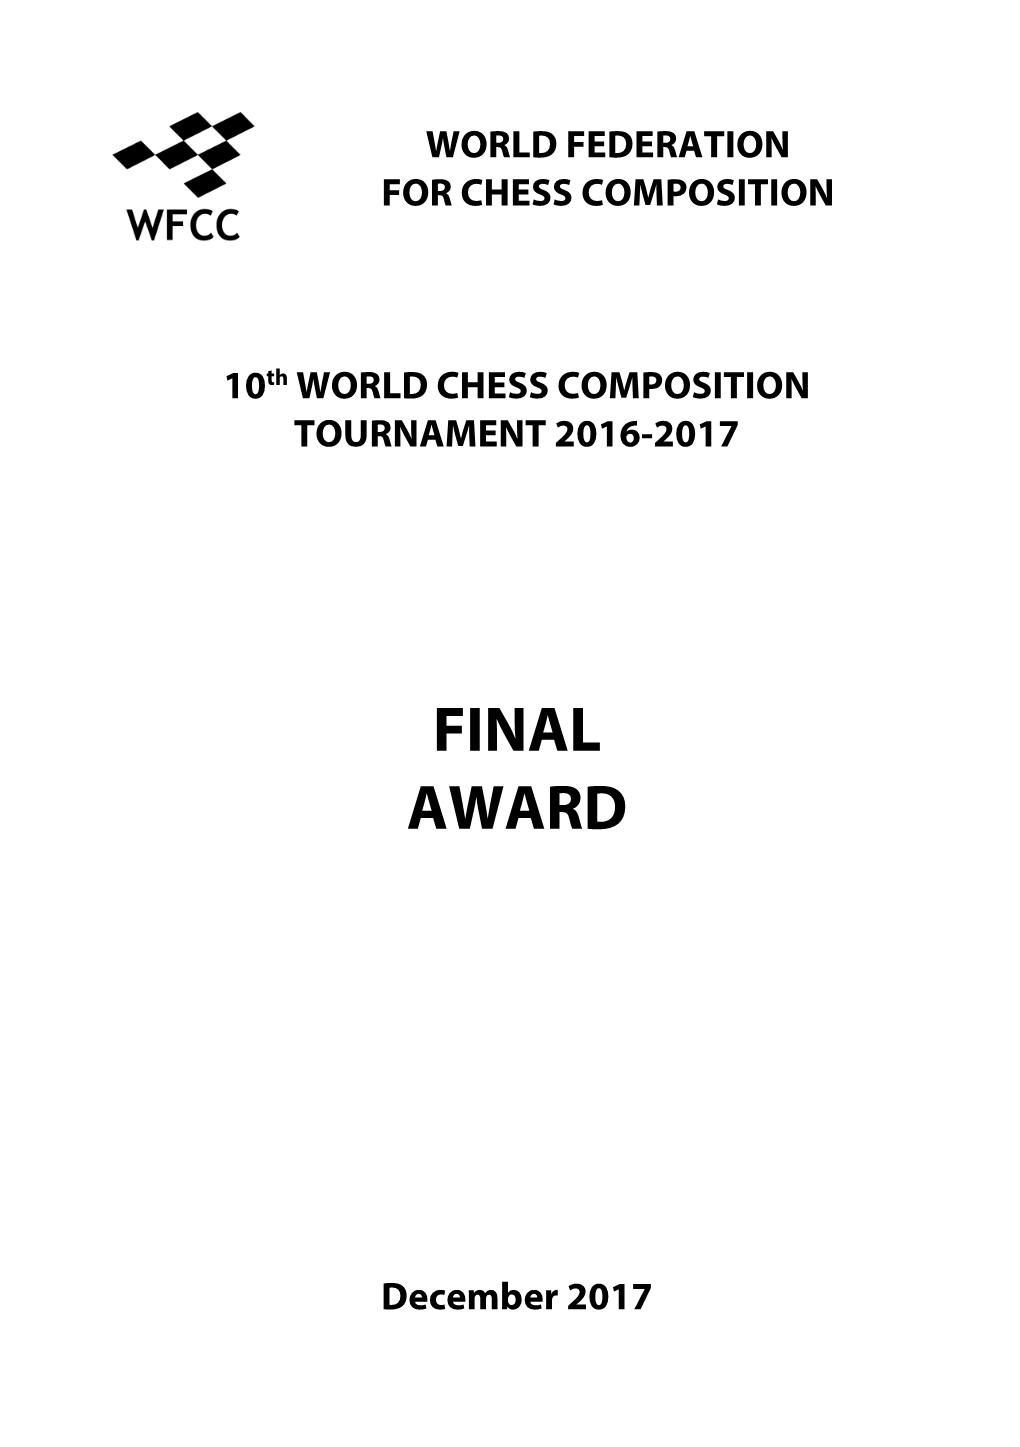 Final Award Booklet